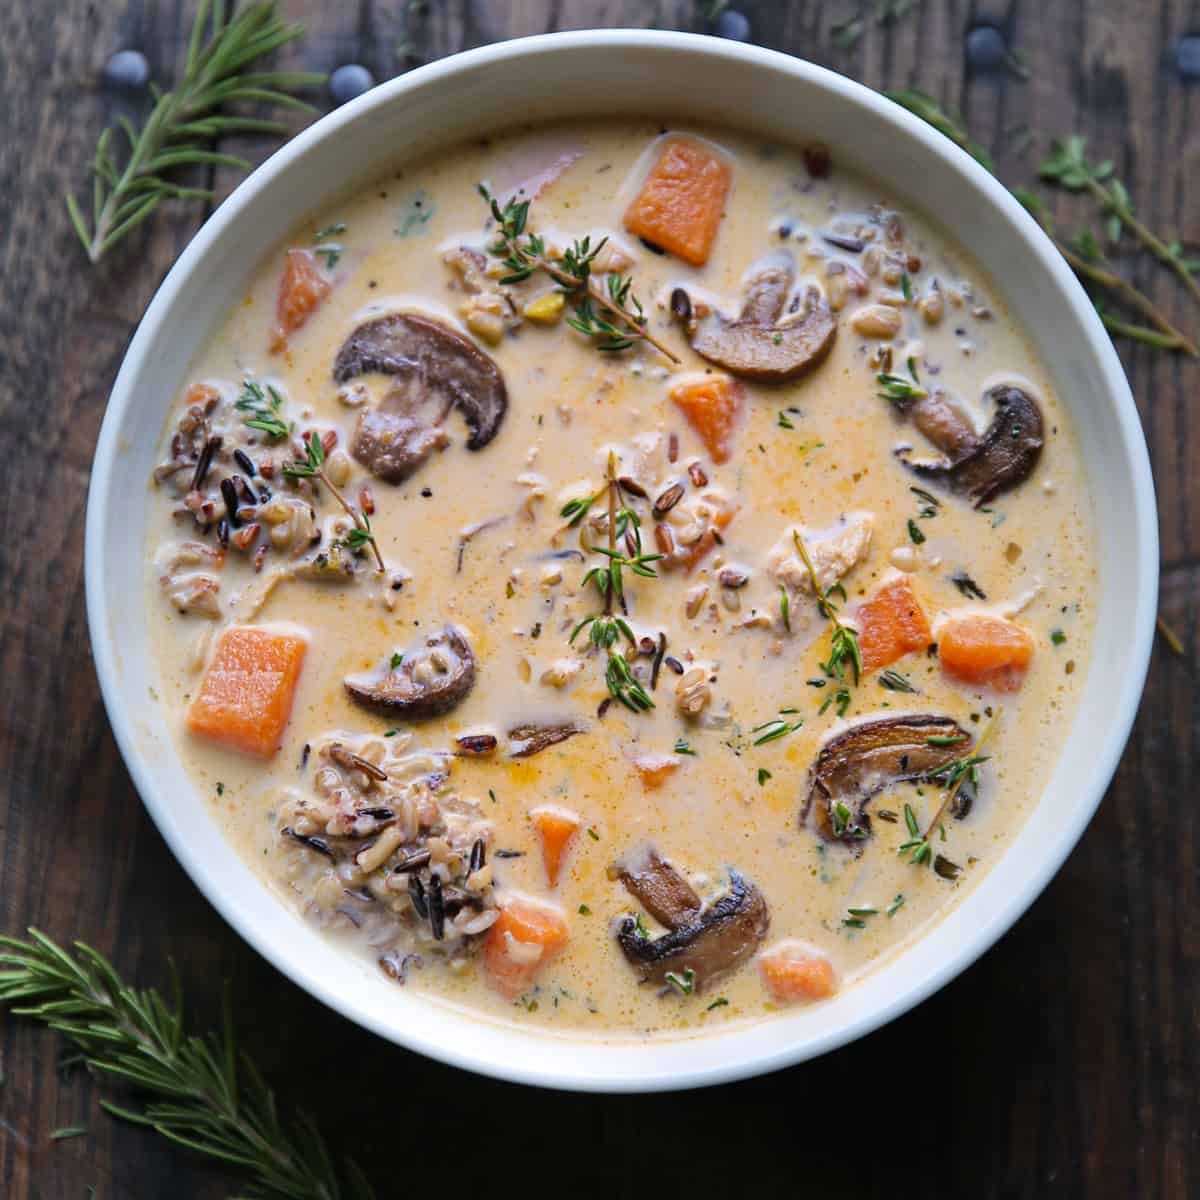 https://juliasalbum.com/wp-content/uploads/2021/11/Creamy-Chicken-and-Wild-Rice-Soup-with-Mushrooms-recipe-2.jpg